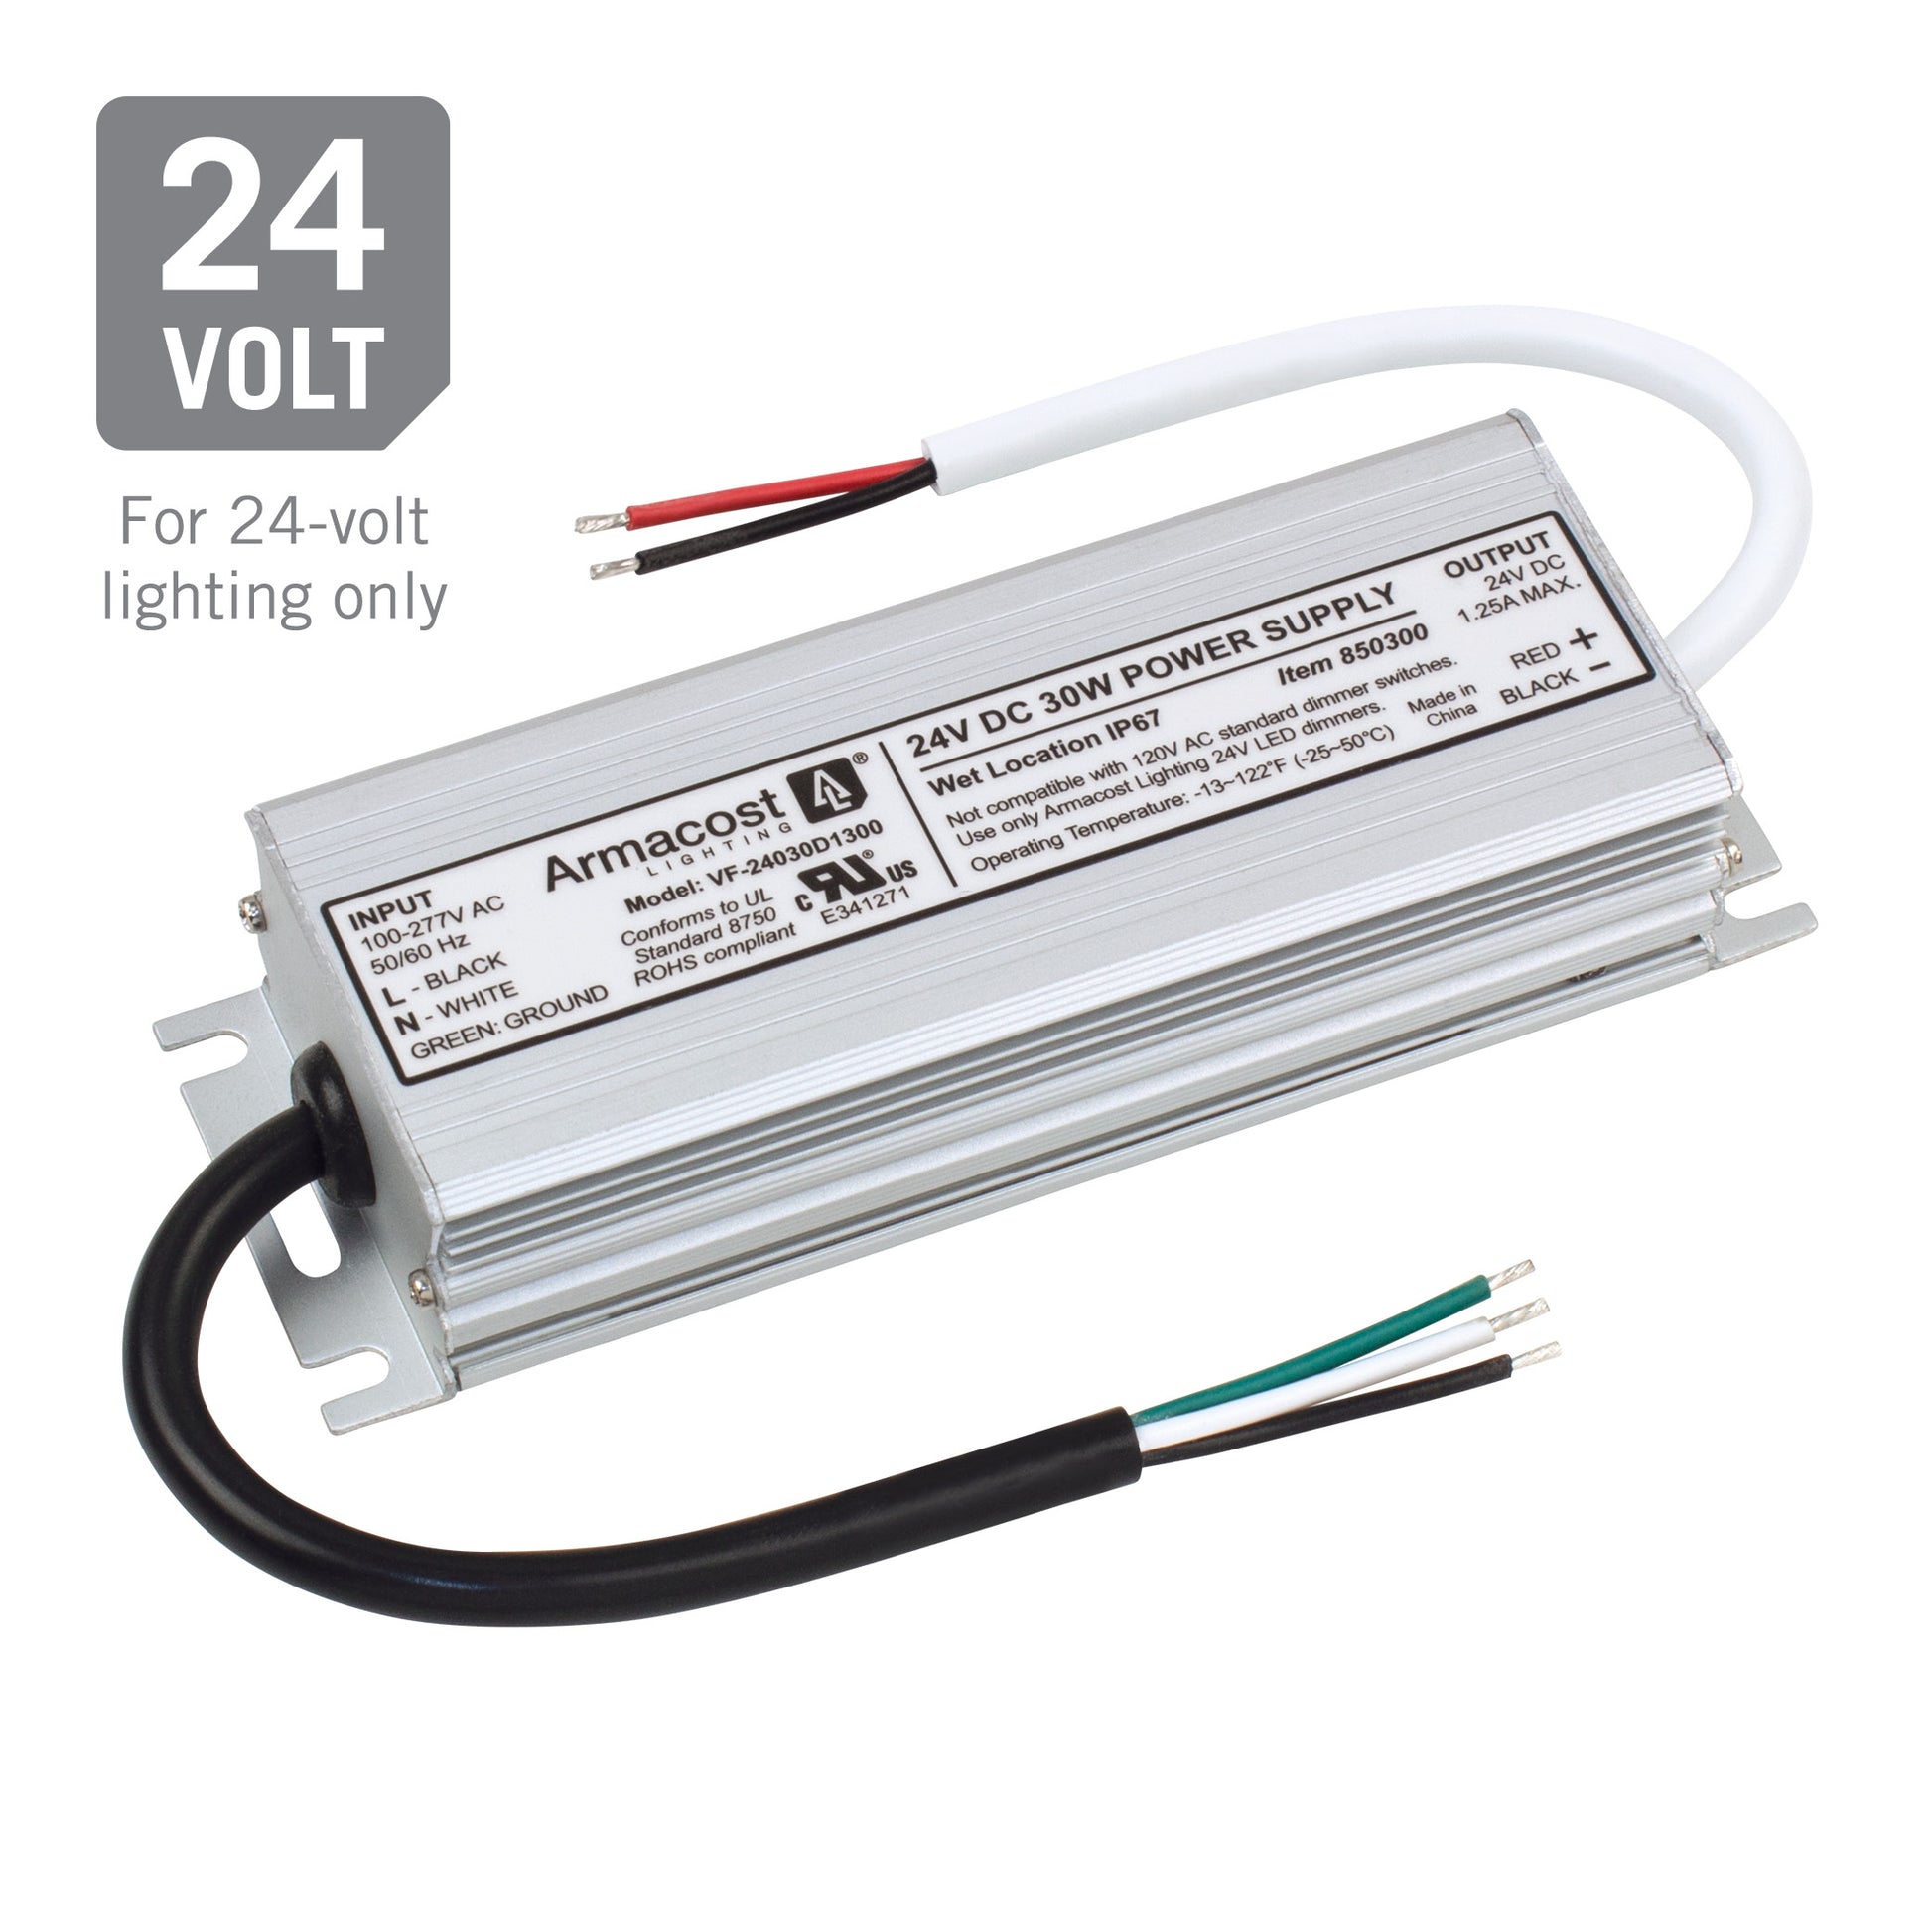 Standard Indoor/Outdoor LED Driver 24V DC – Armacost Lighting